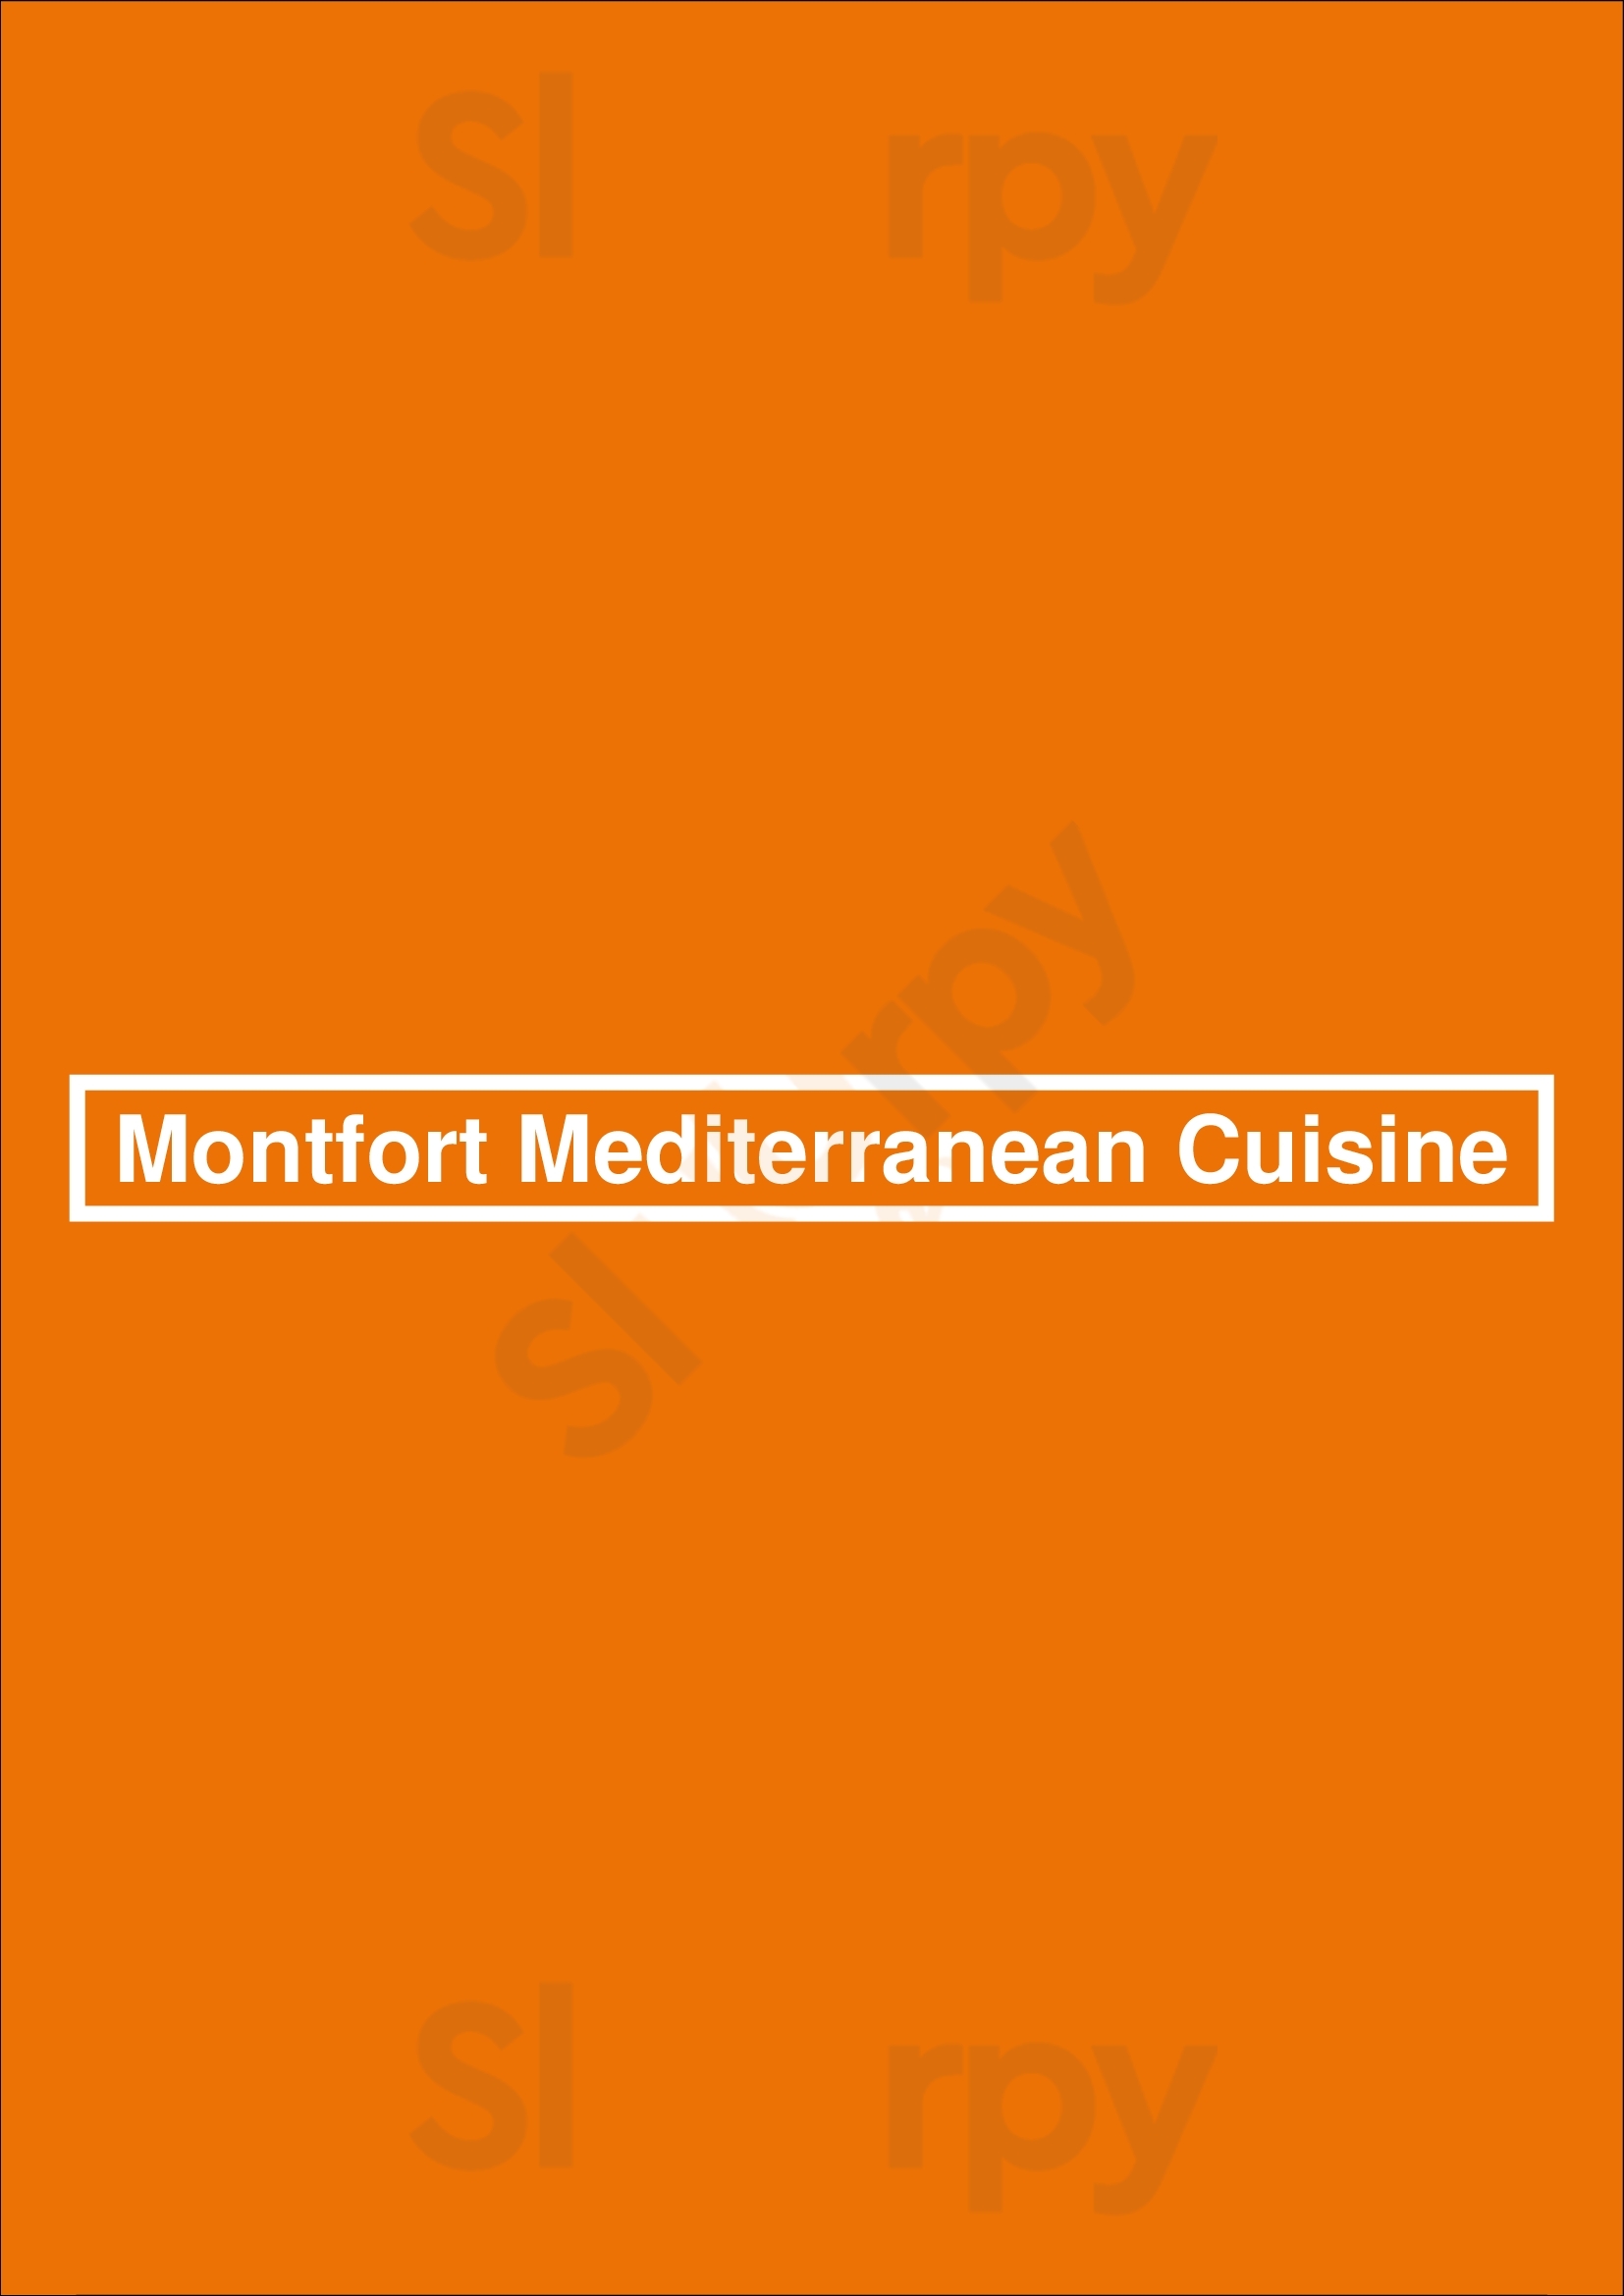 Montfort Mediterranean Cuisine Mississauga Menu - 1